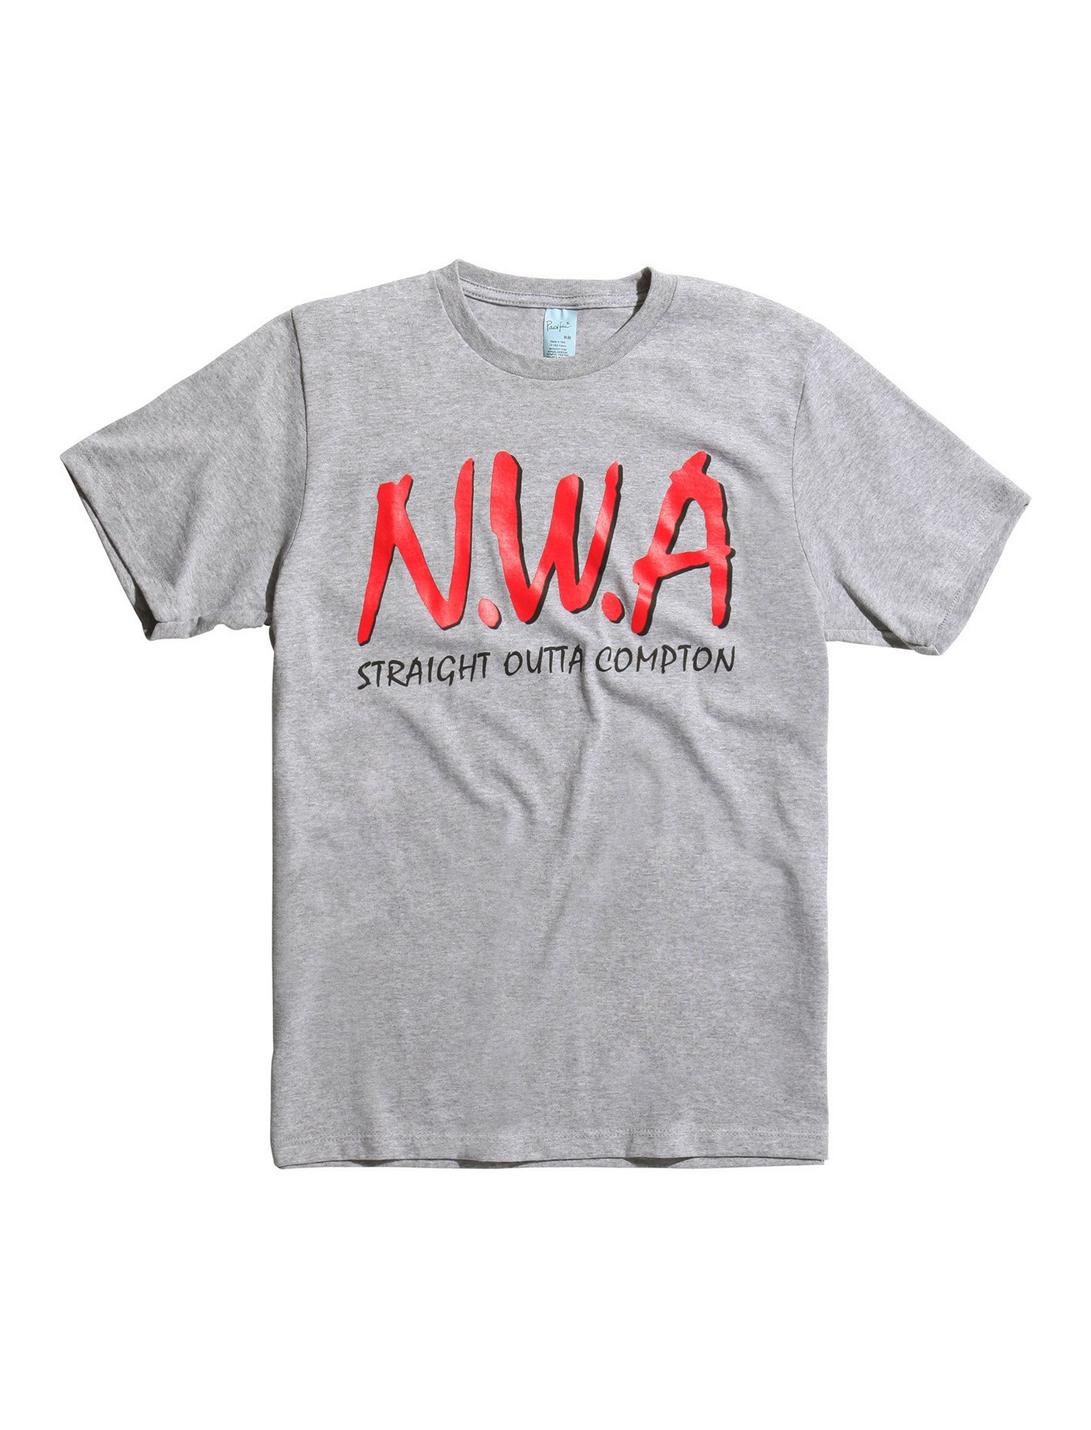 N.W.A T Shirt Logo New Official Licensed Mens Unisex Tie Dye NWA Hip 